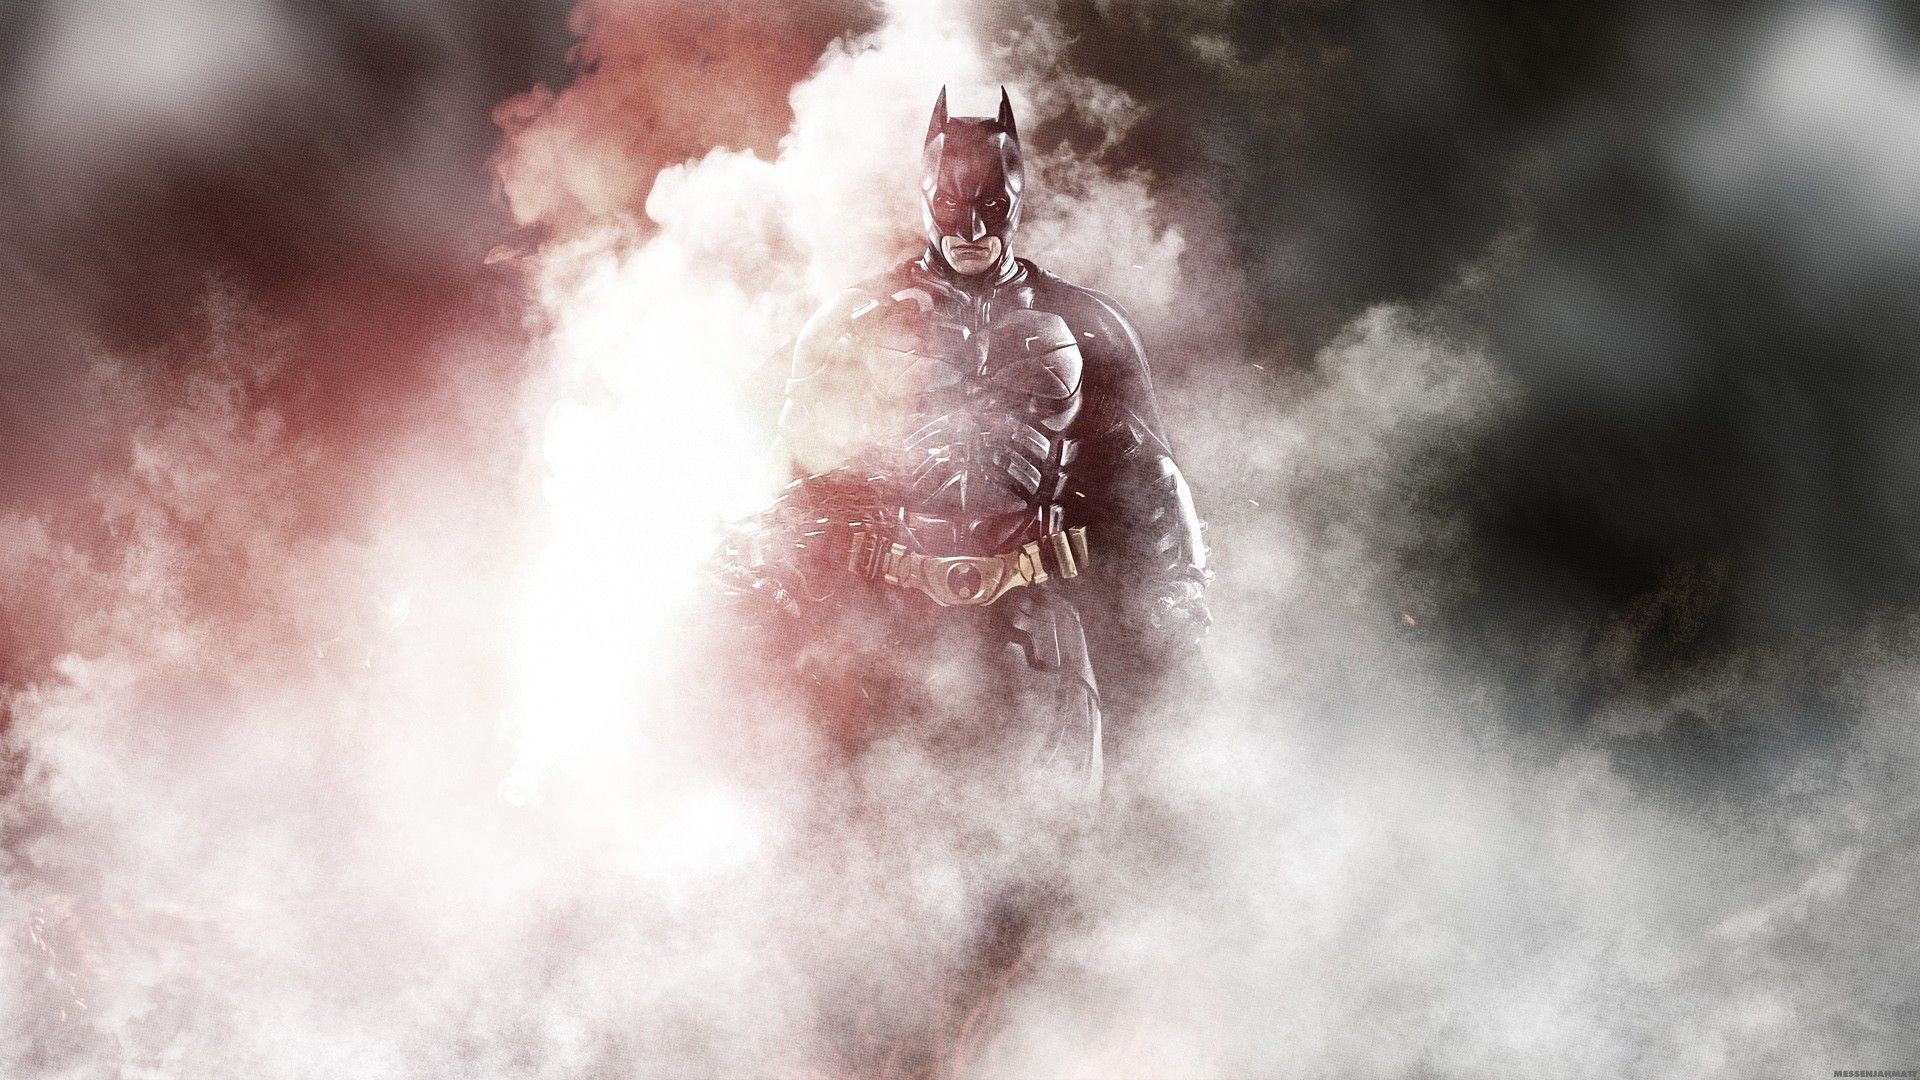 General 1920x1080 Batman smoke artwork armor frontal view superhero DC Comics